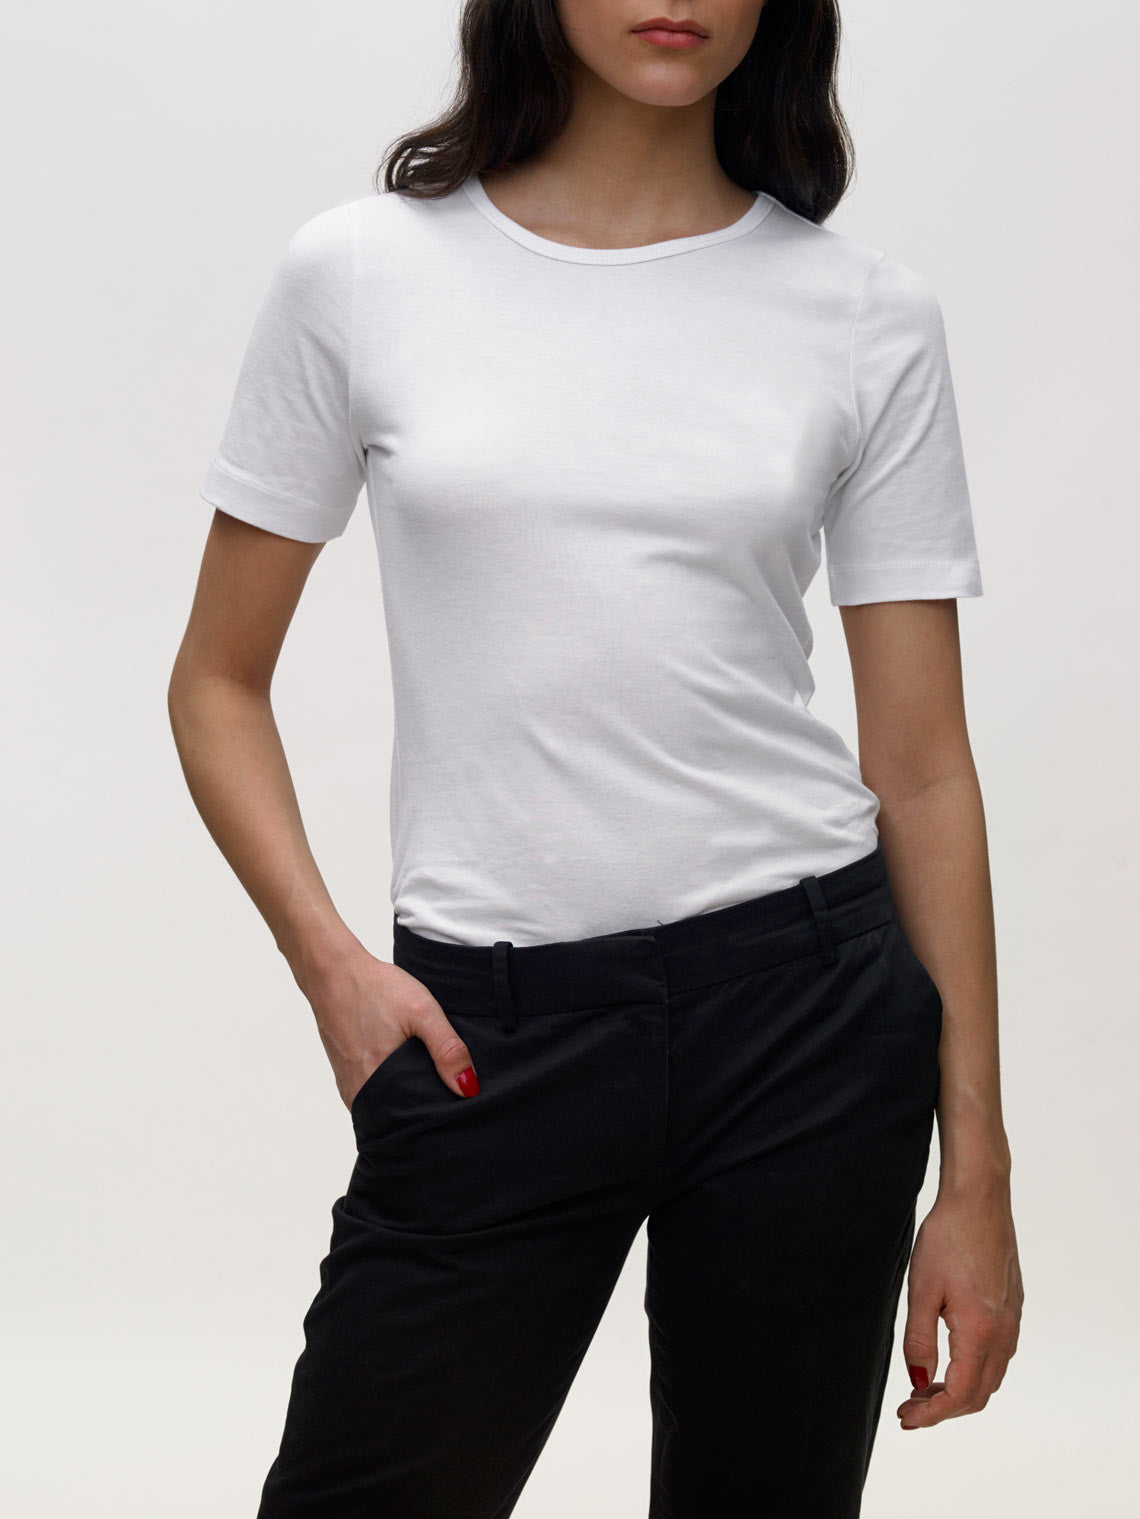 Model wearing white, crew neck, slim, KOTN t-shirt.